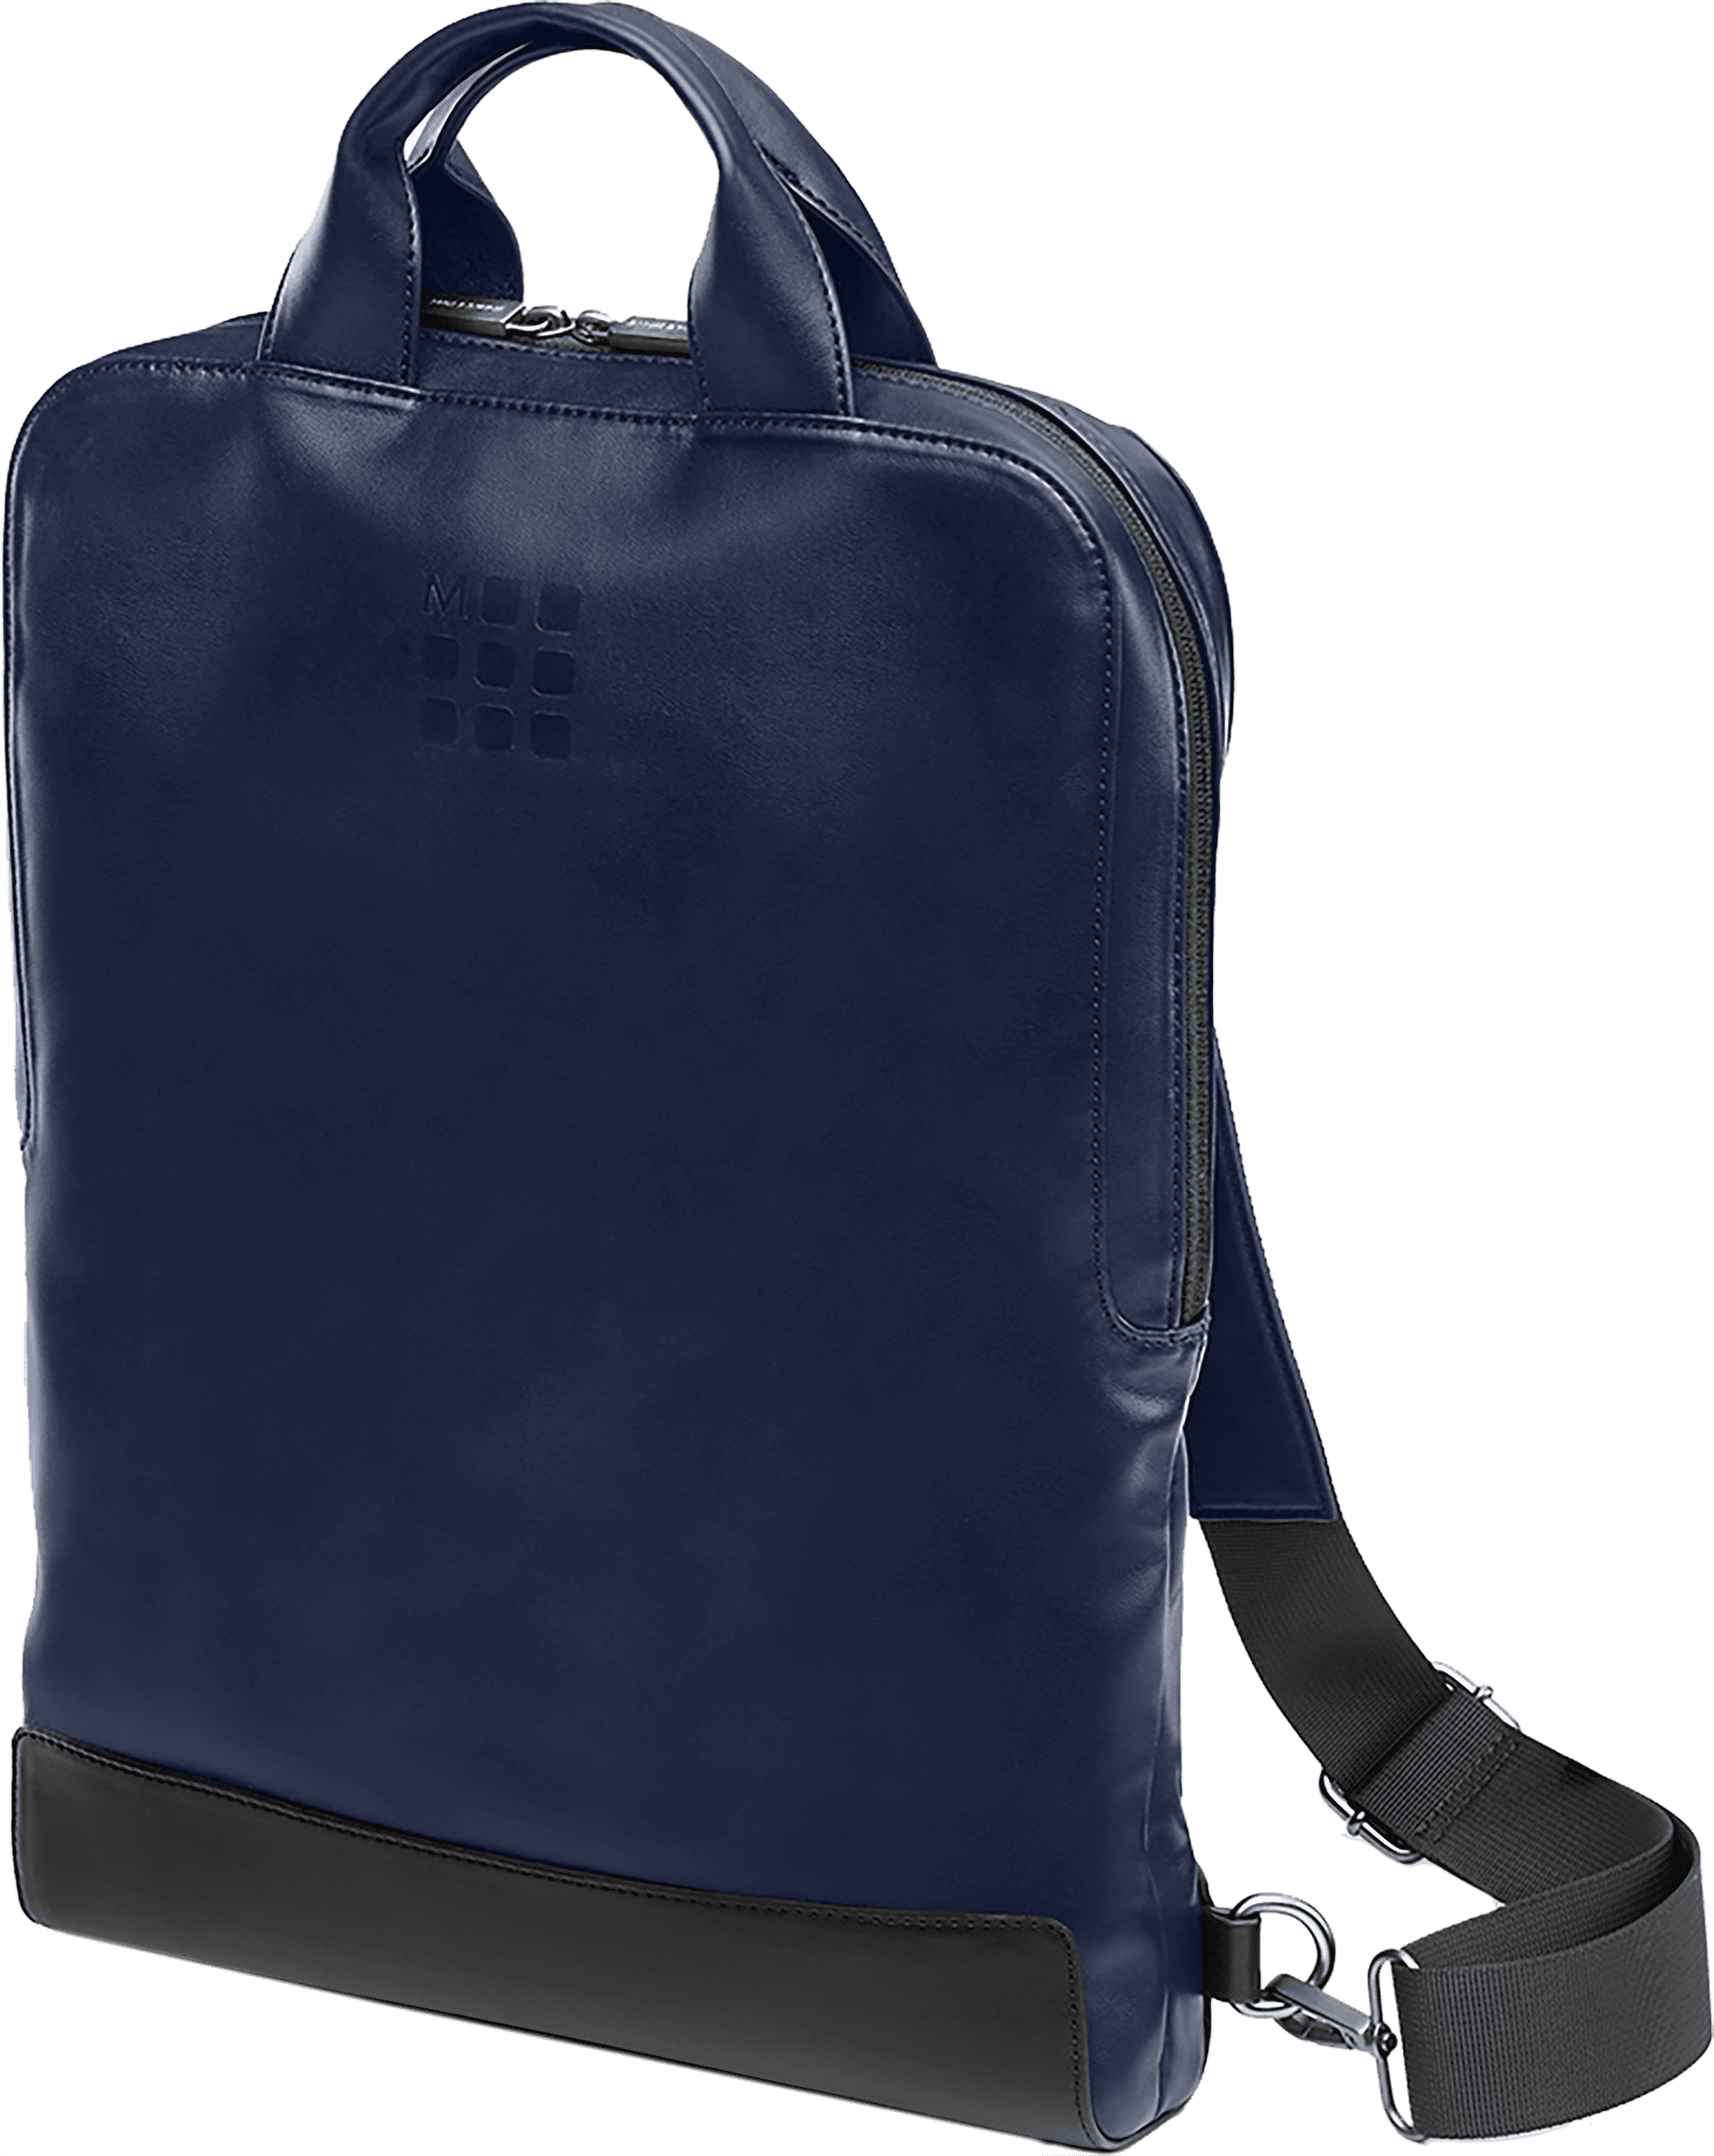 Moleskine classic pro backpack | Order Swag